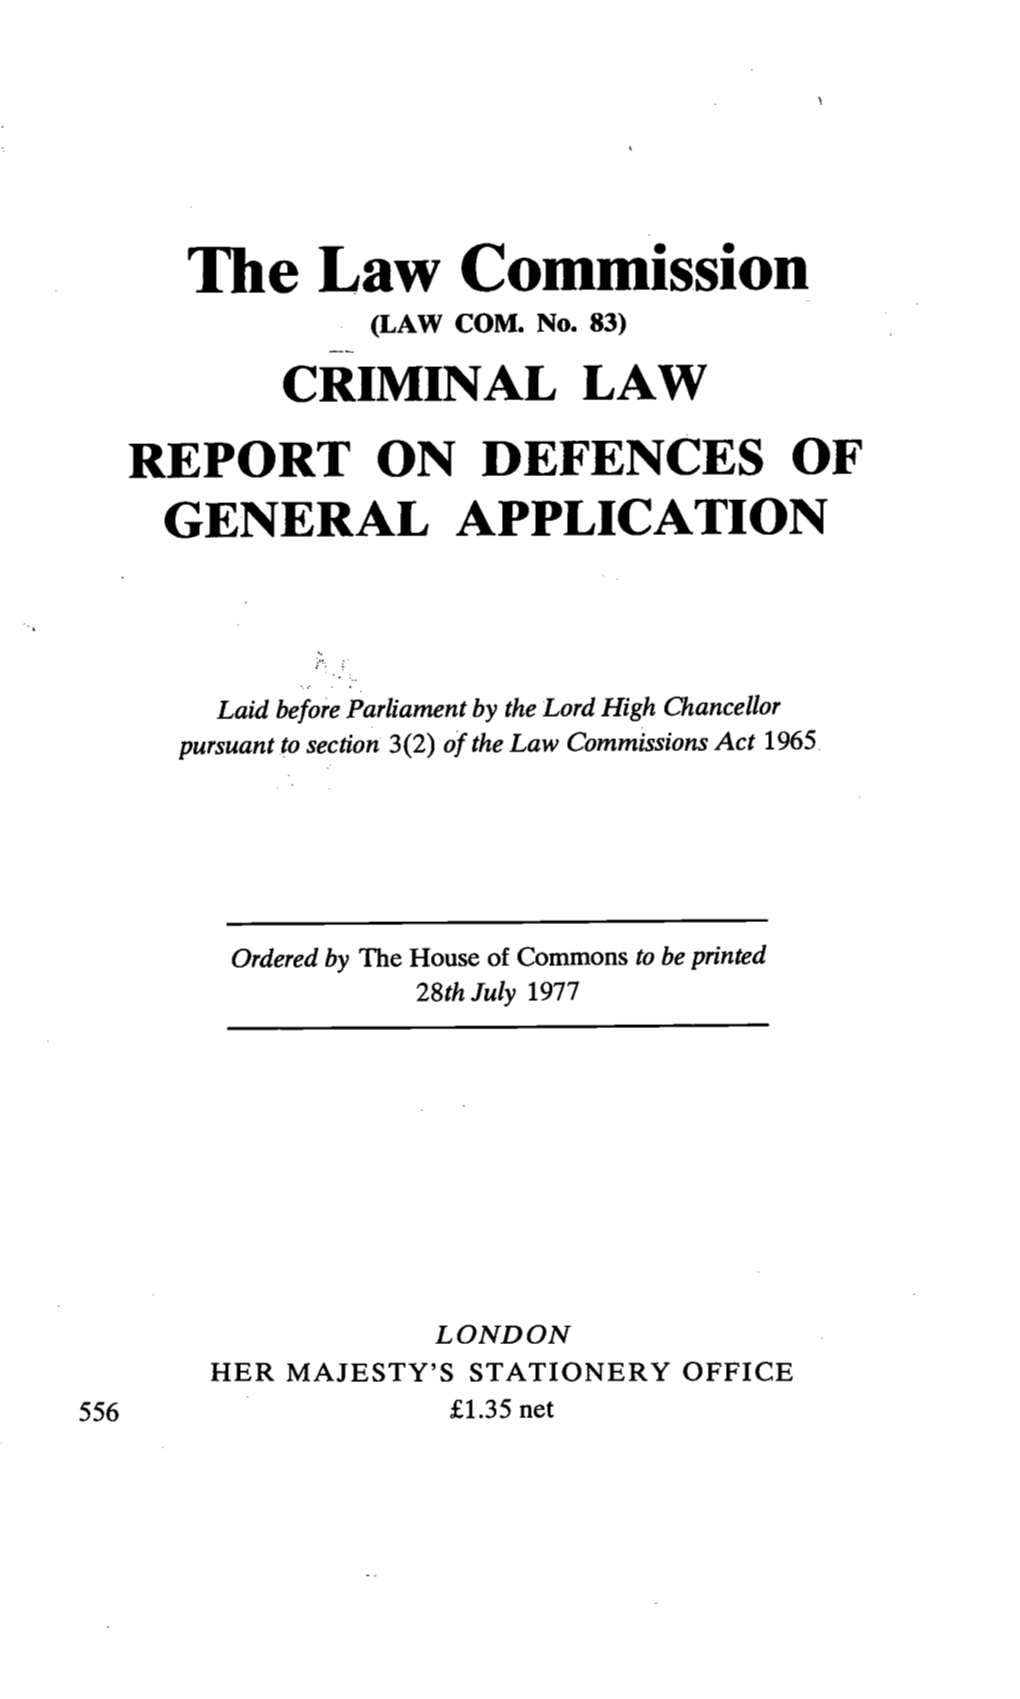 Criminal Law Report on Defences of General Application